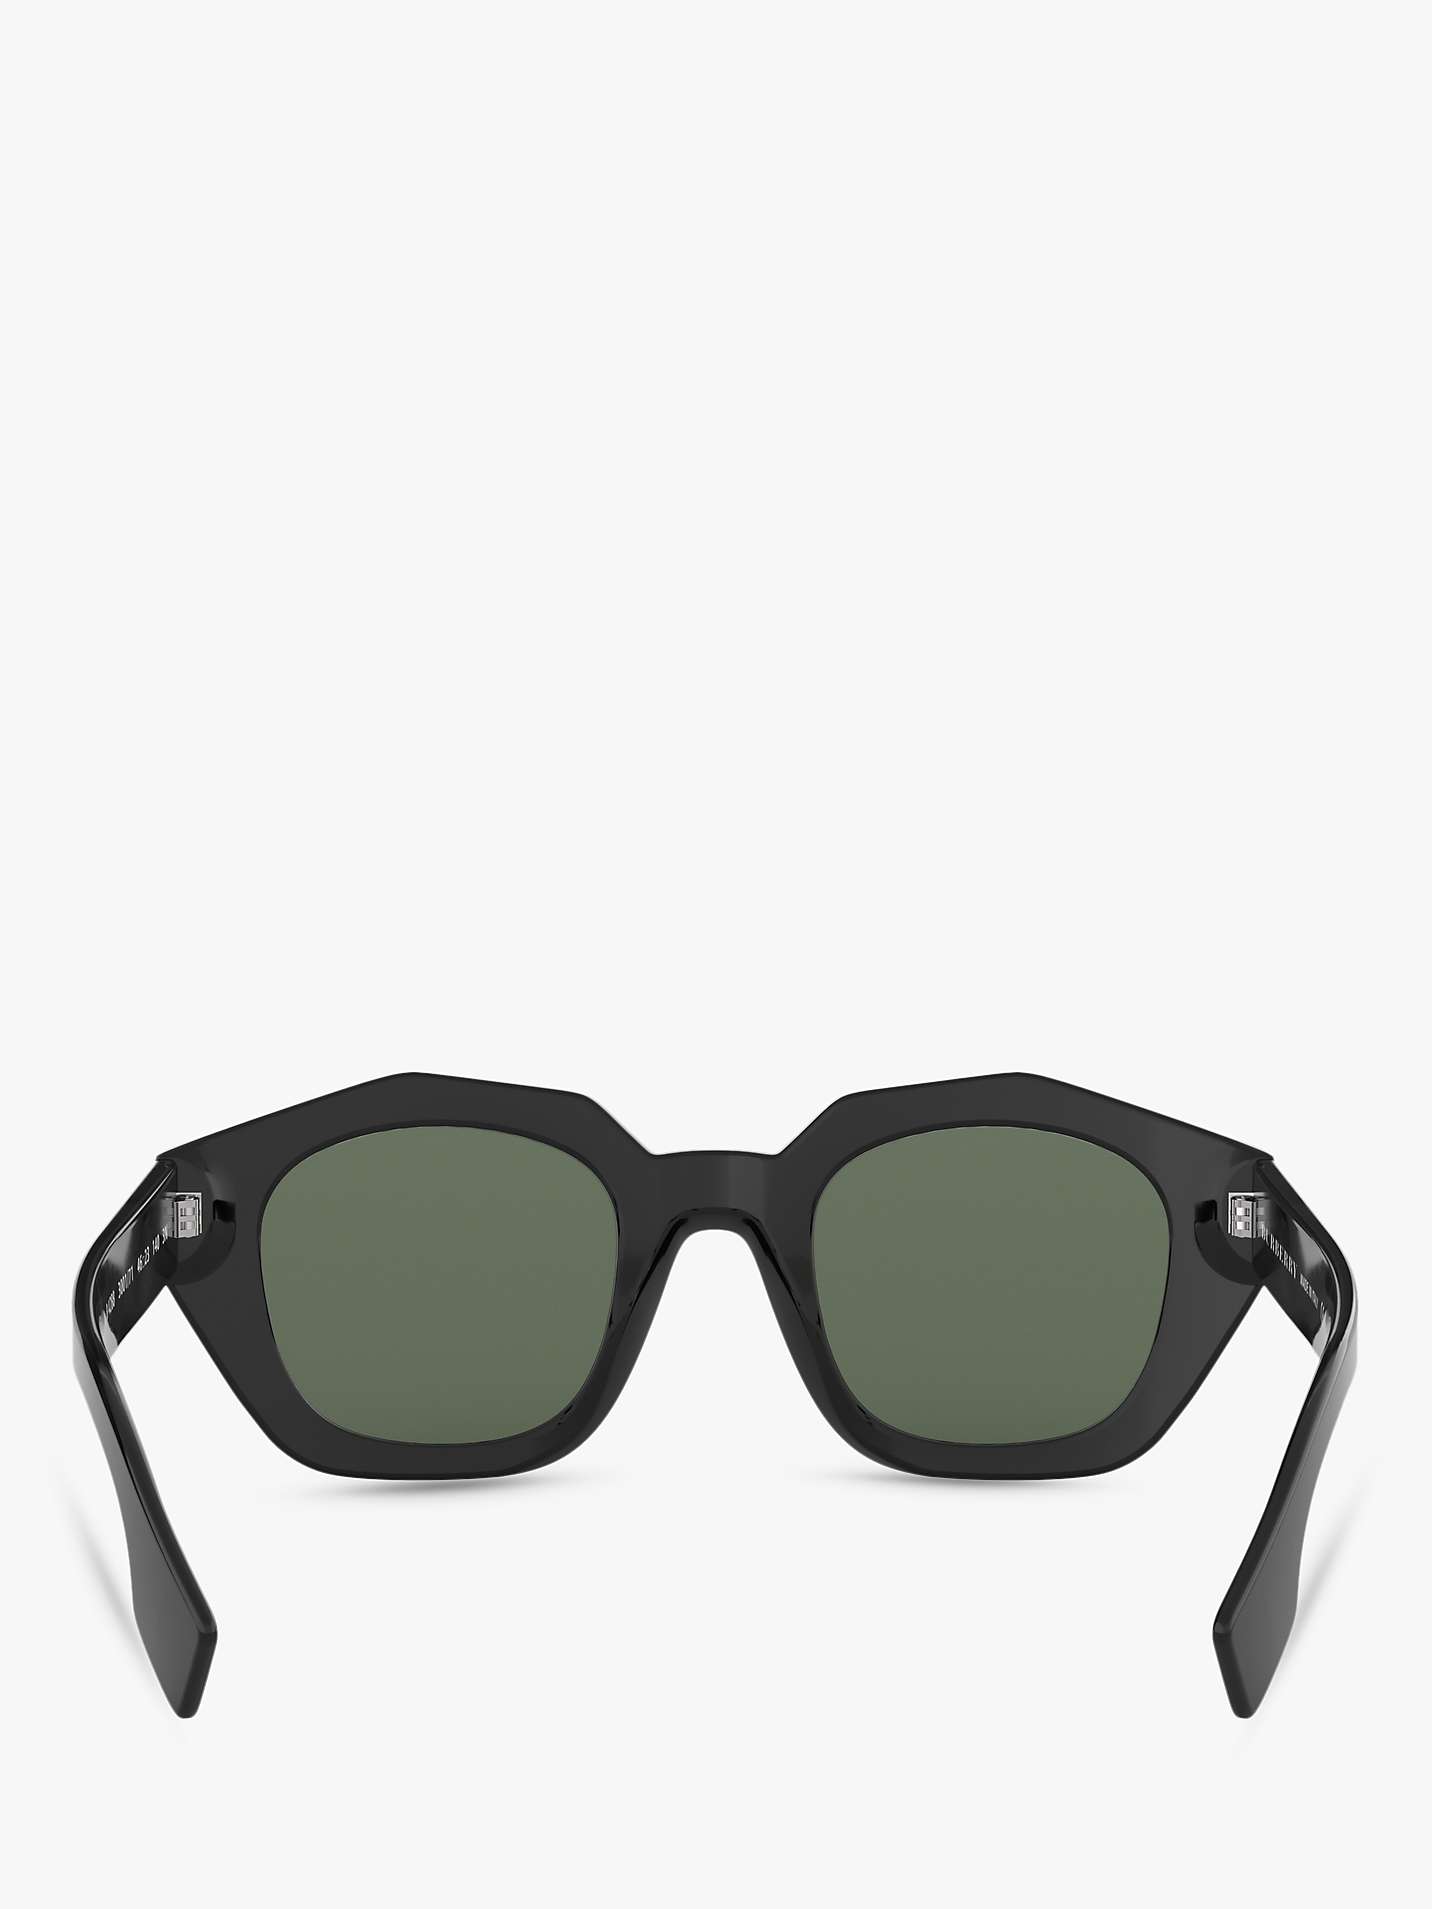 Buy Burberry BE4288 Women's Irregular Sunglasses, Black/Green Online at johnlewis.com